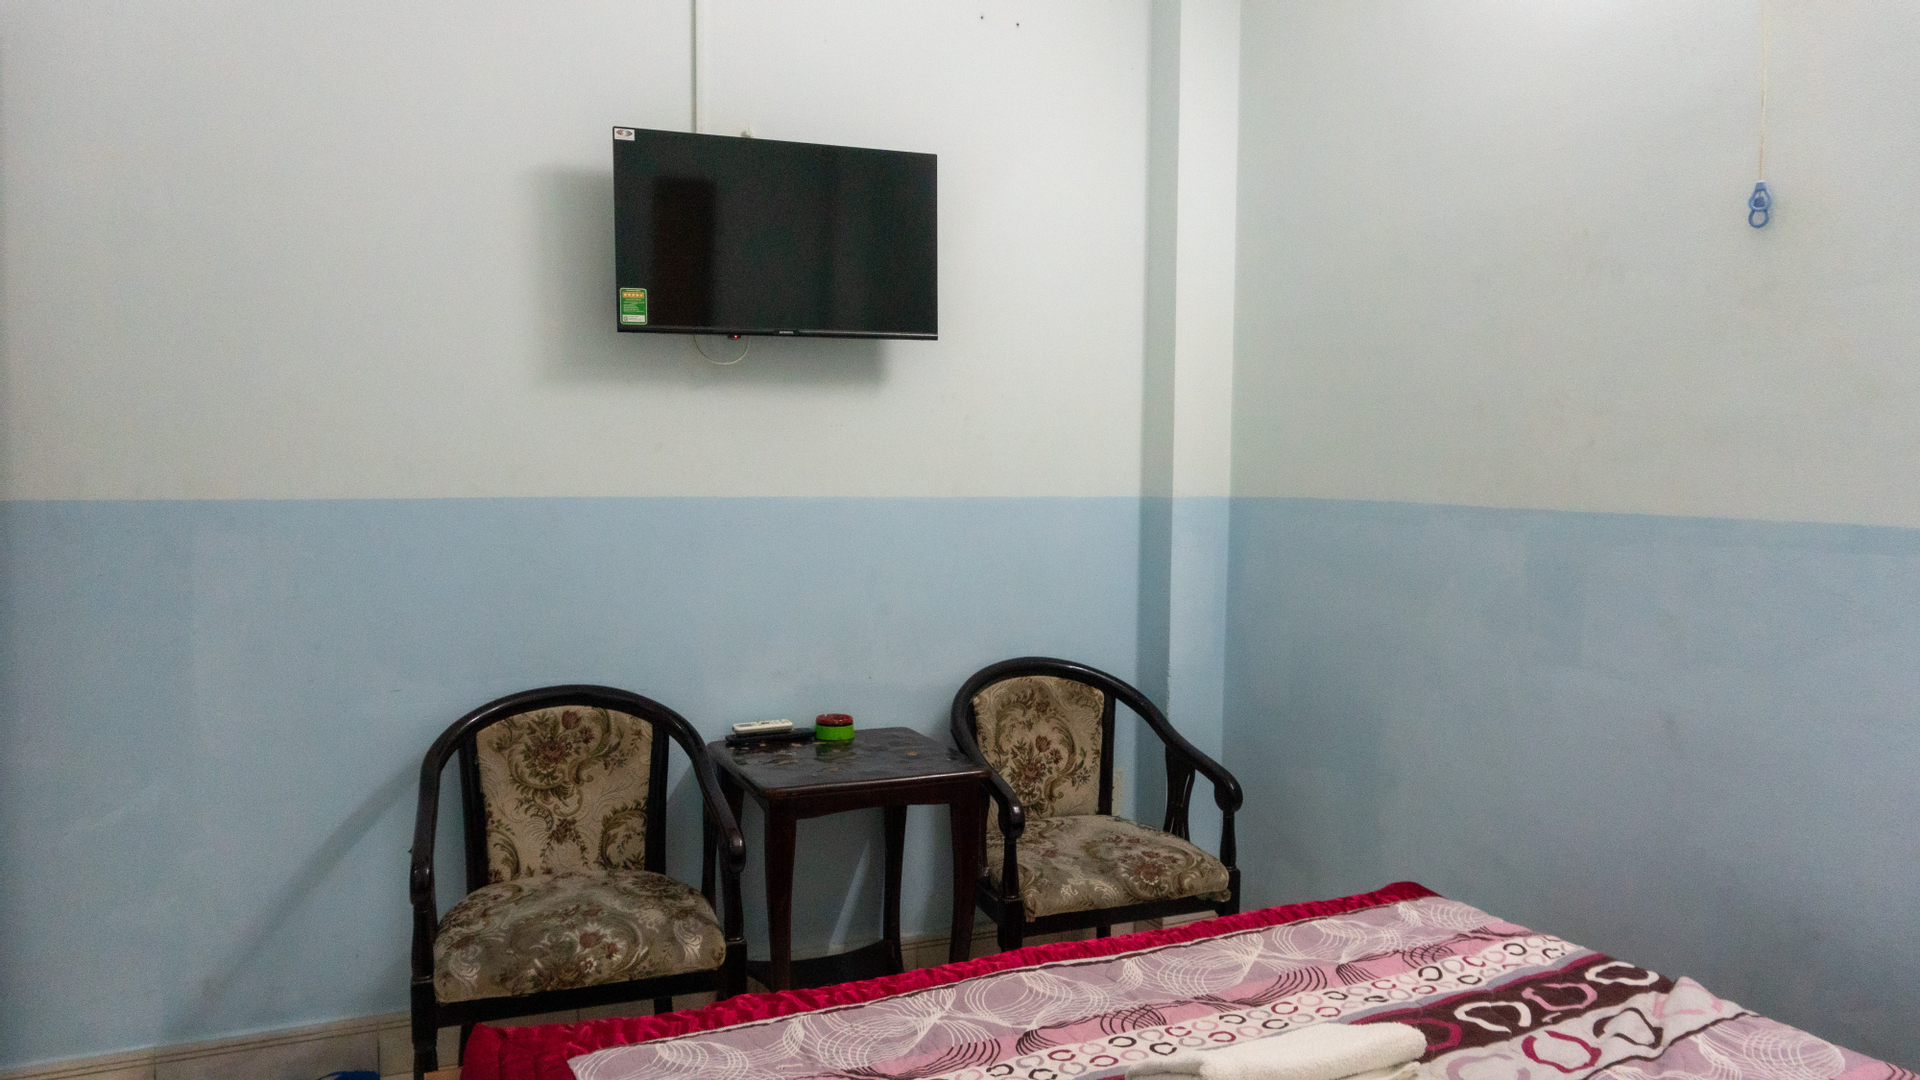 Bedroom 3, Viet Hung 8 Hotel, Binh Tan